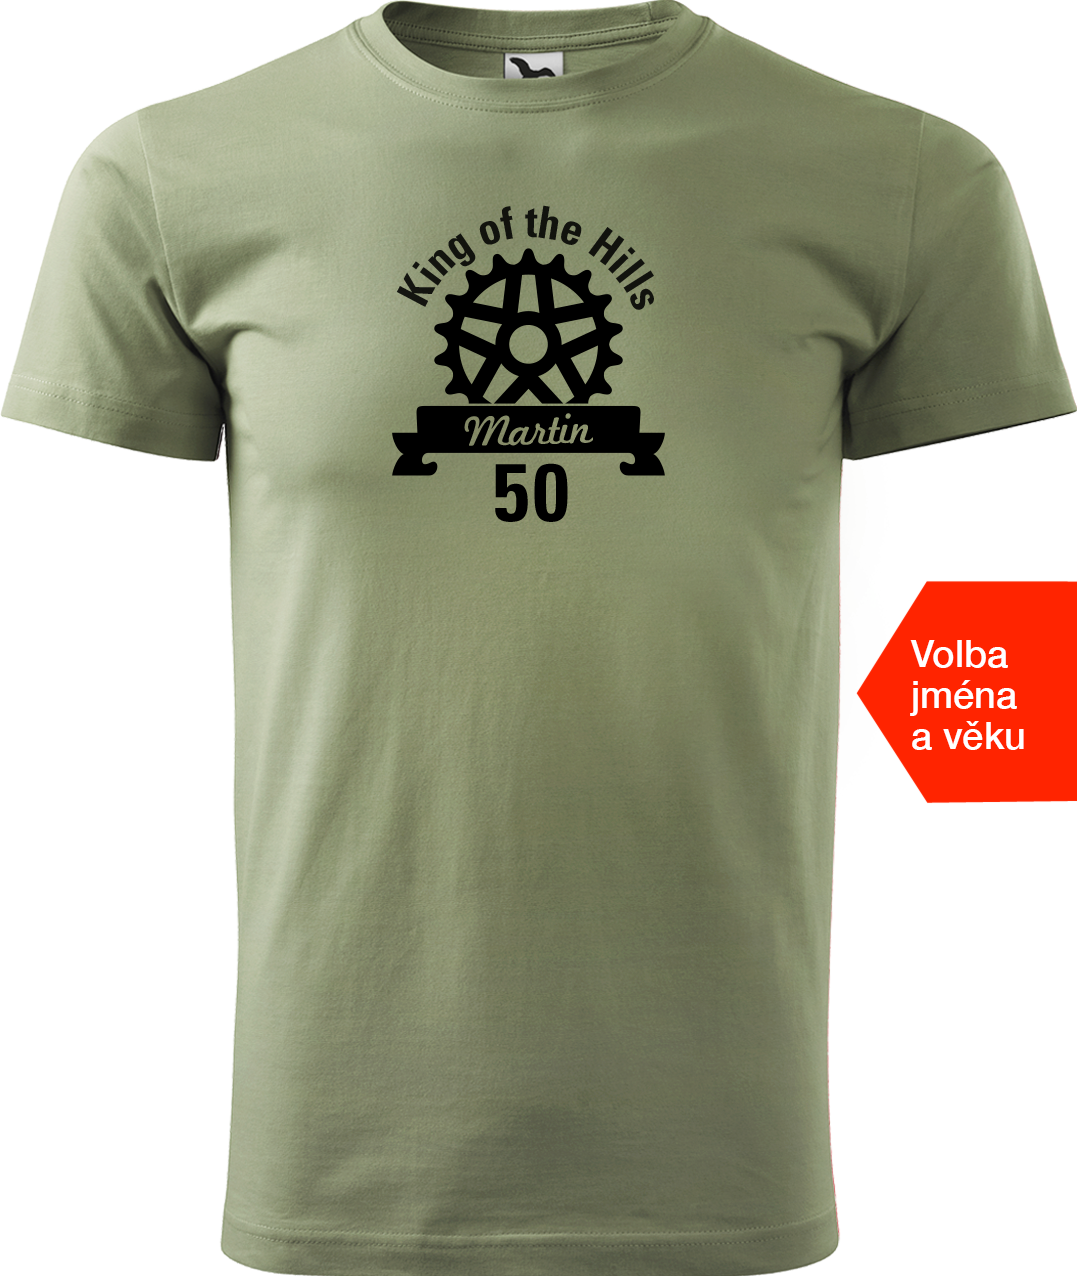 Pánské tričko pro cyklistu se jménem - King of the Hills Velikost: 4XL, Barva: Světlá khaki (28)